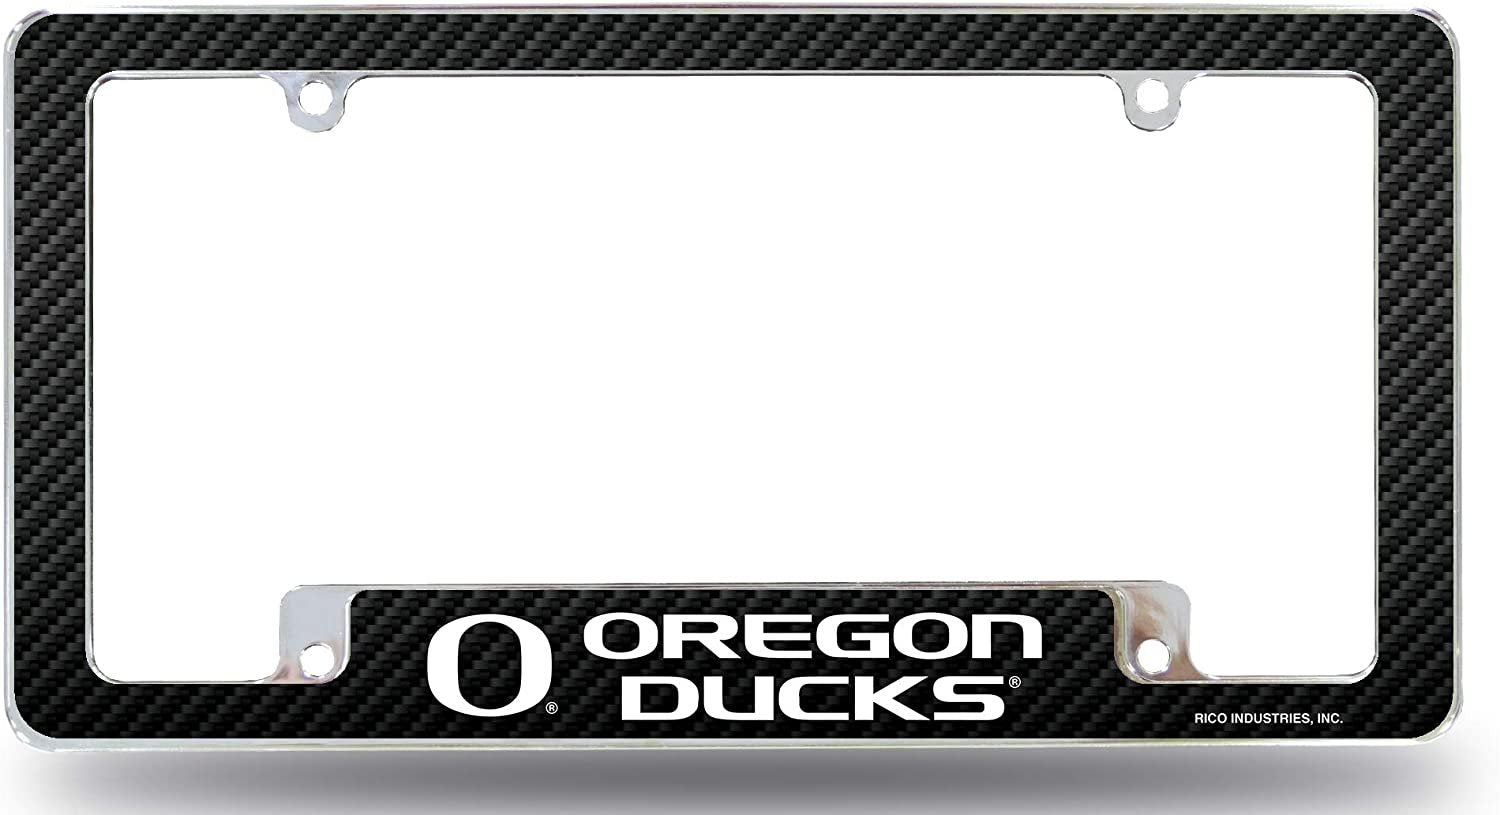 University of Oregon Ducks Metal License Plate Frame Chrome Tag Cover Carbon Fiber Design